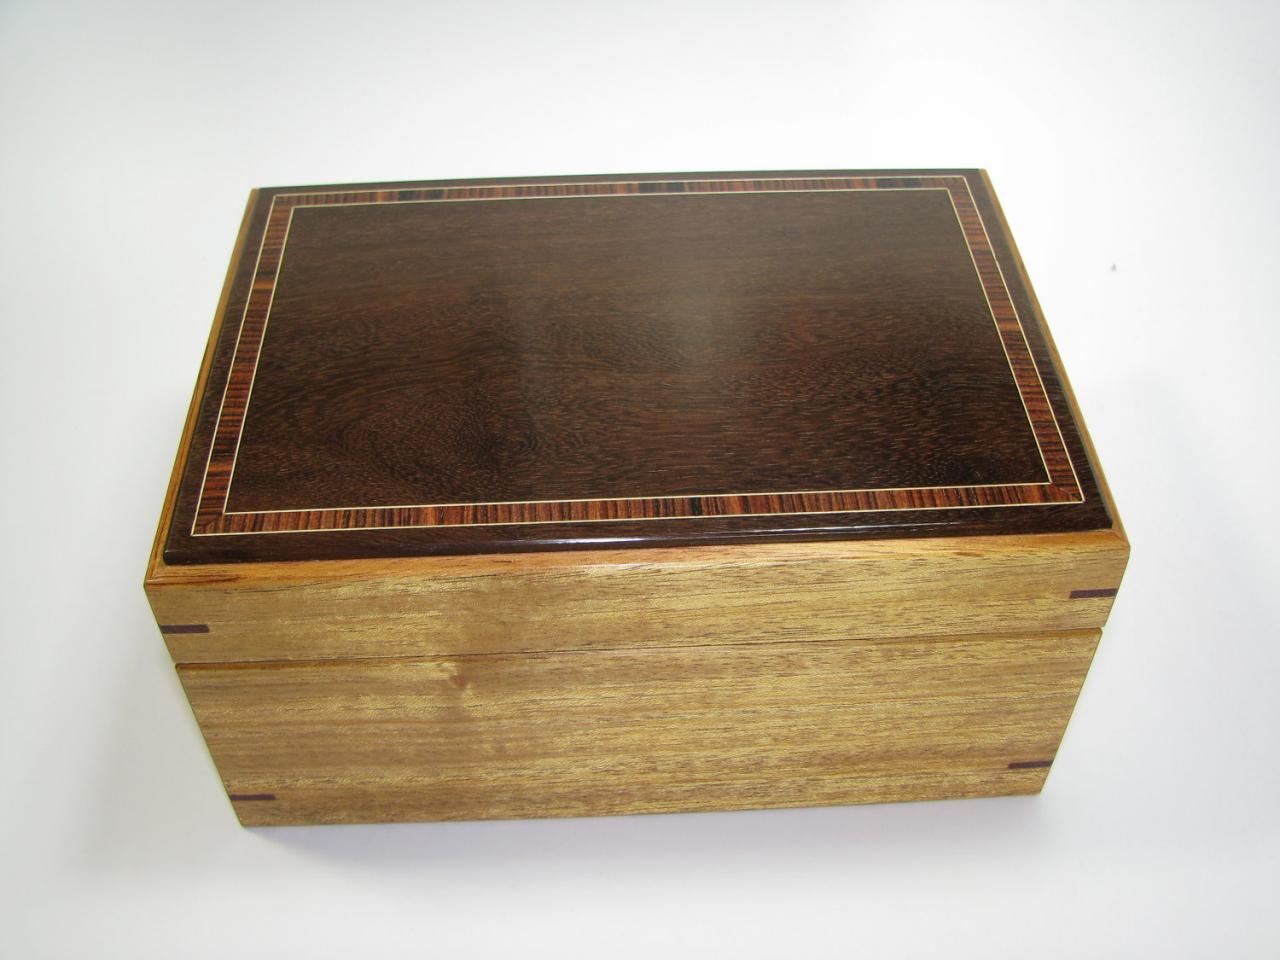 Stylish Leather Lined Keepsake Box. Mahogany And Katalox Box With Inlaid Kingwood And Holly Border. 8" X 5.5" X 4"